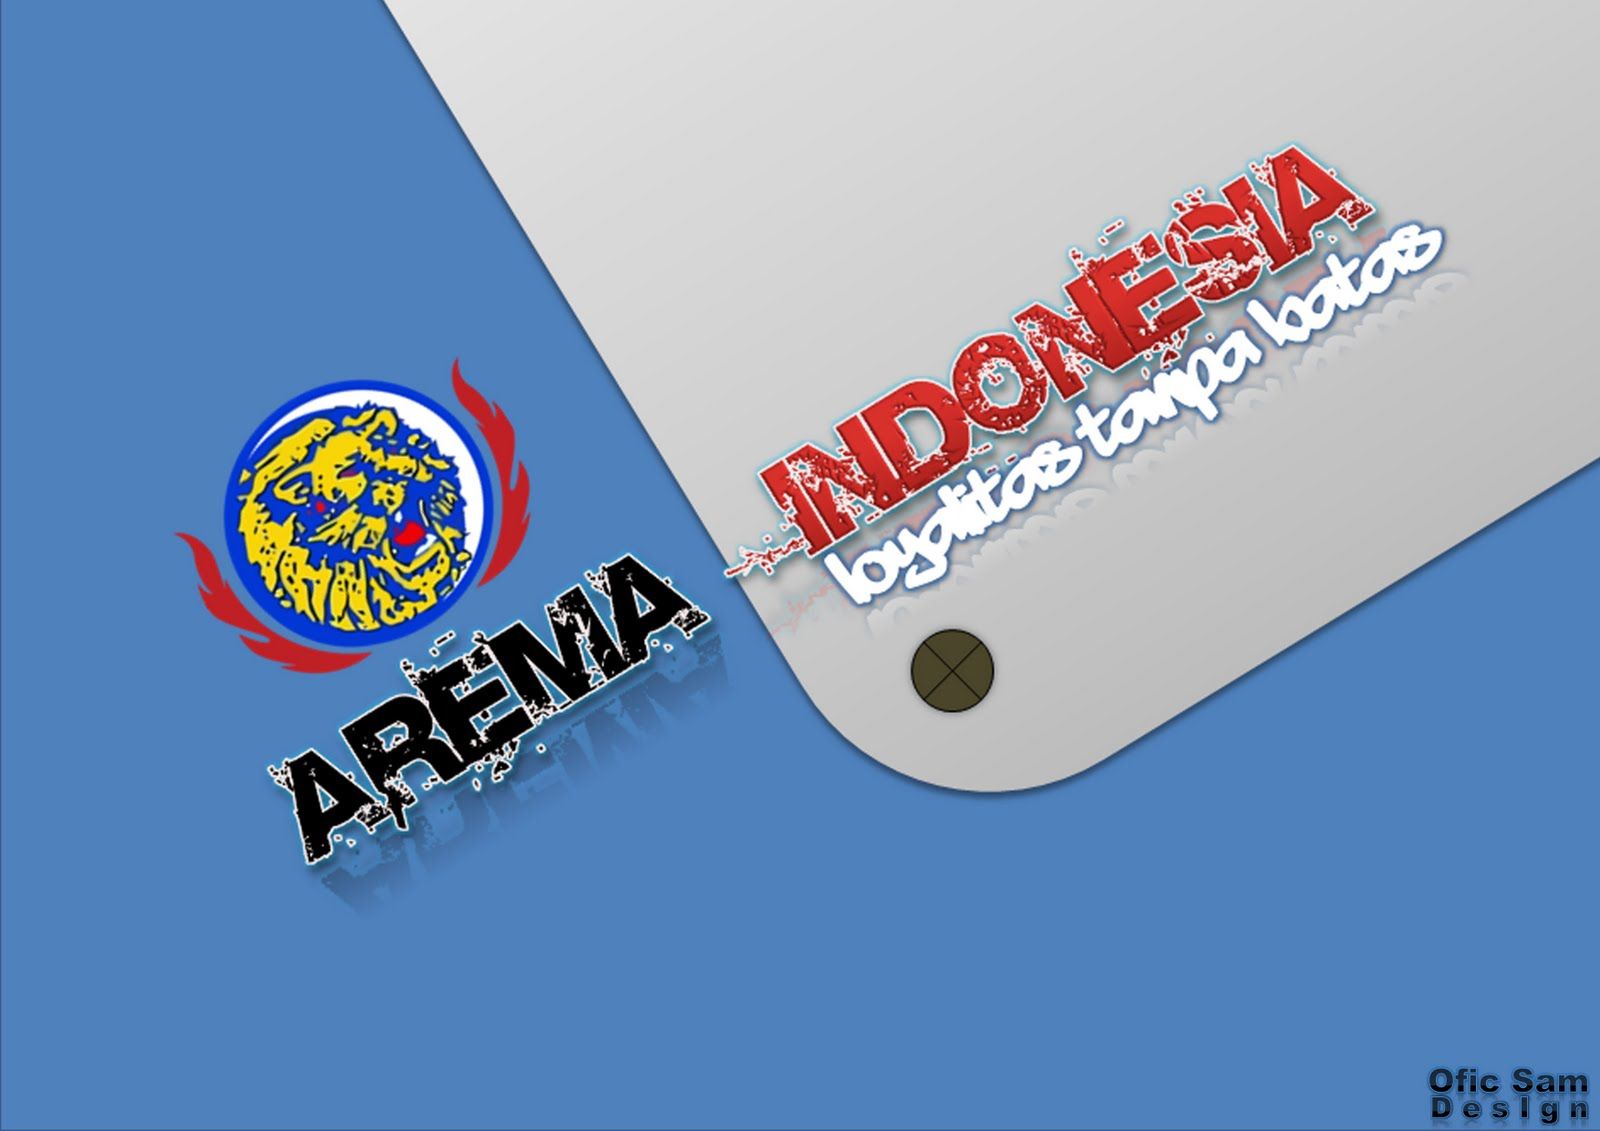 Arema Indonesia